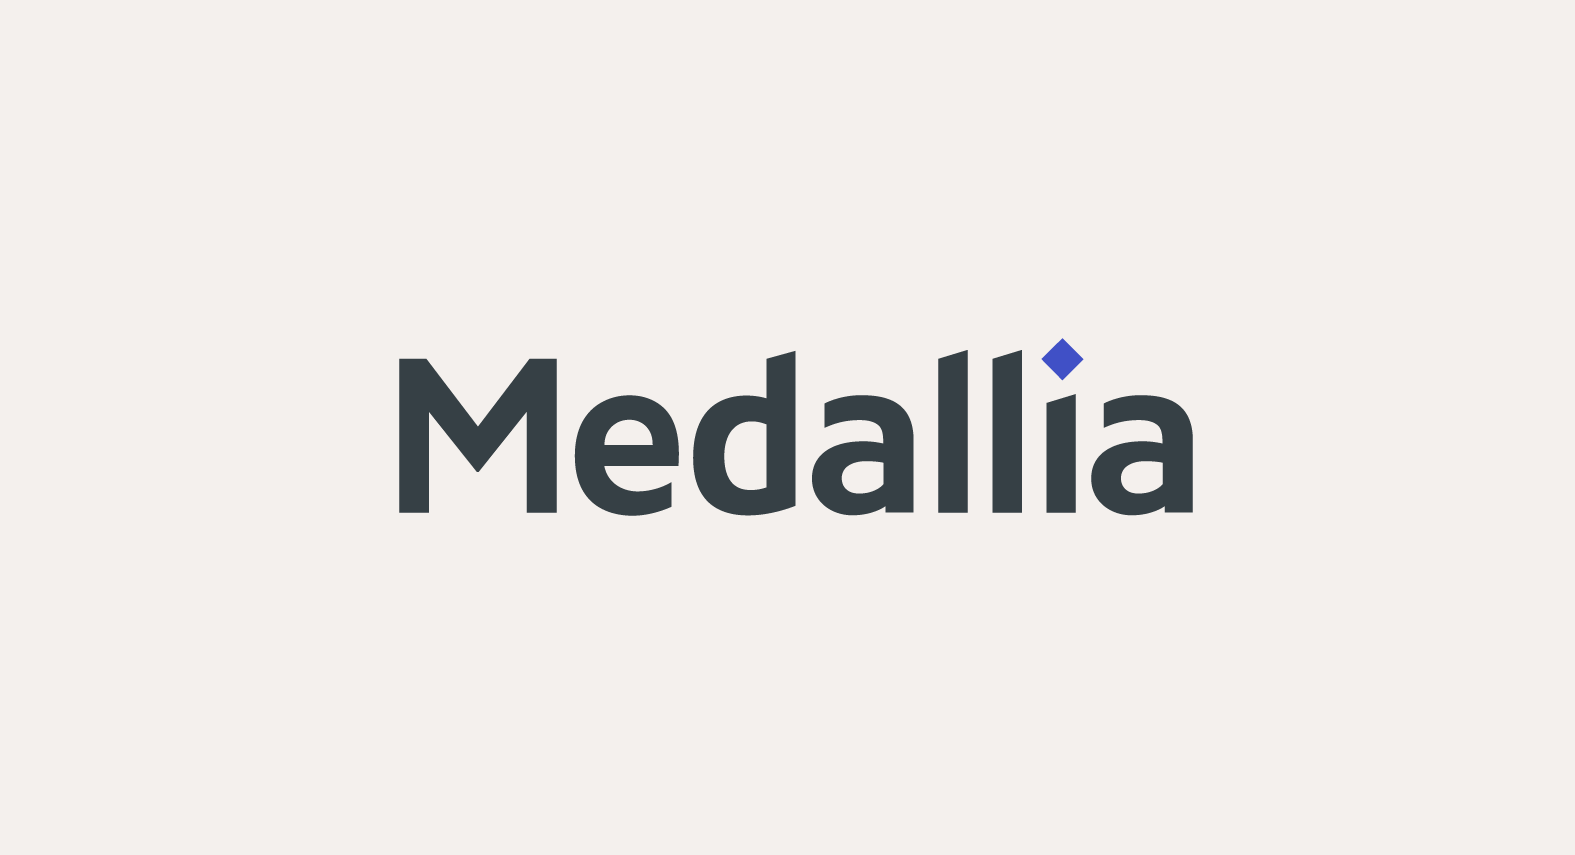 Medallia Logo - Meet our new logo | Medallia